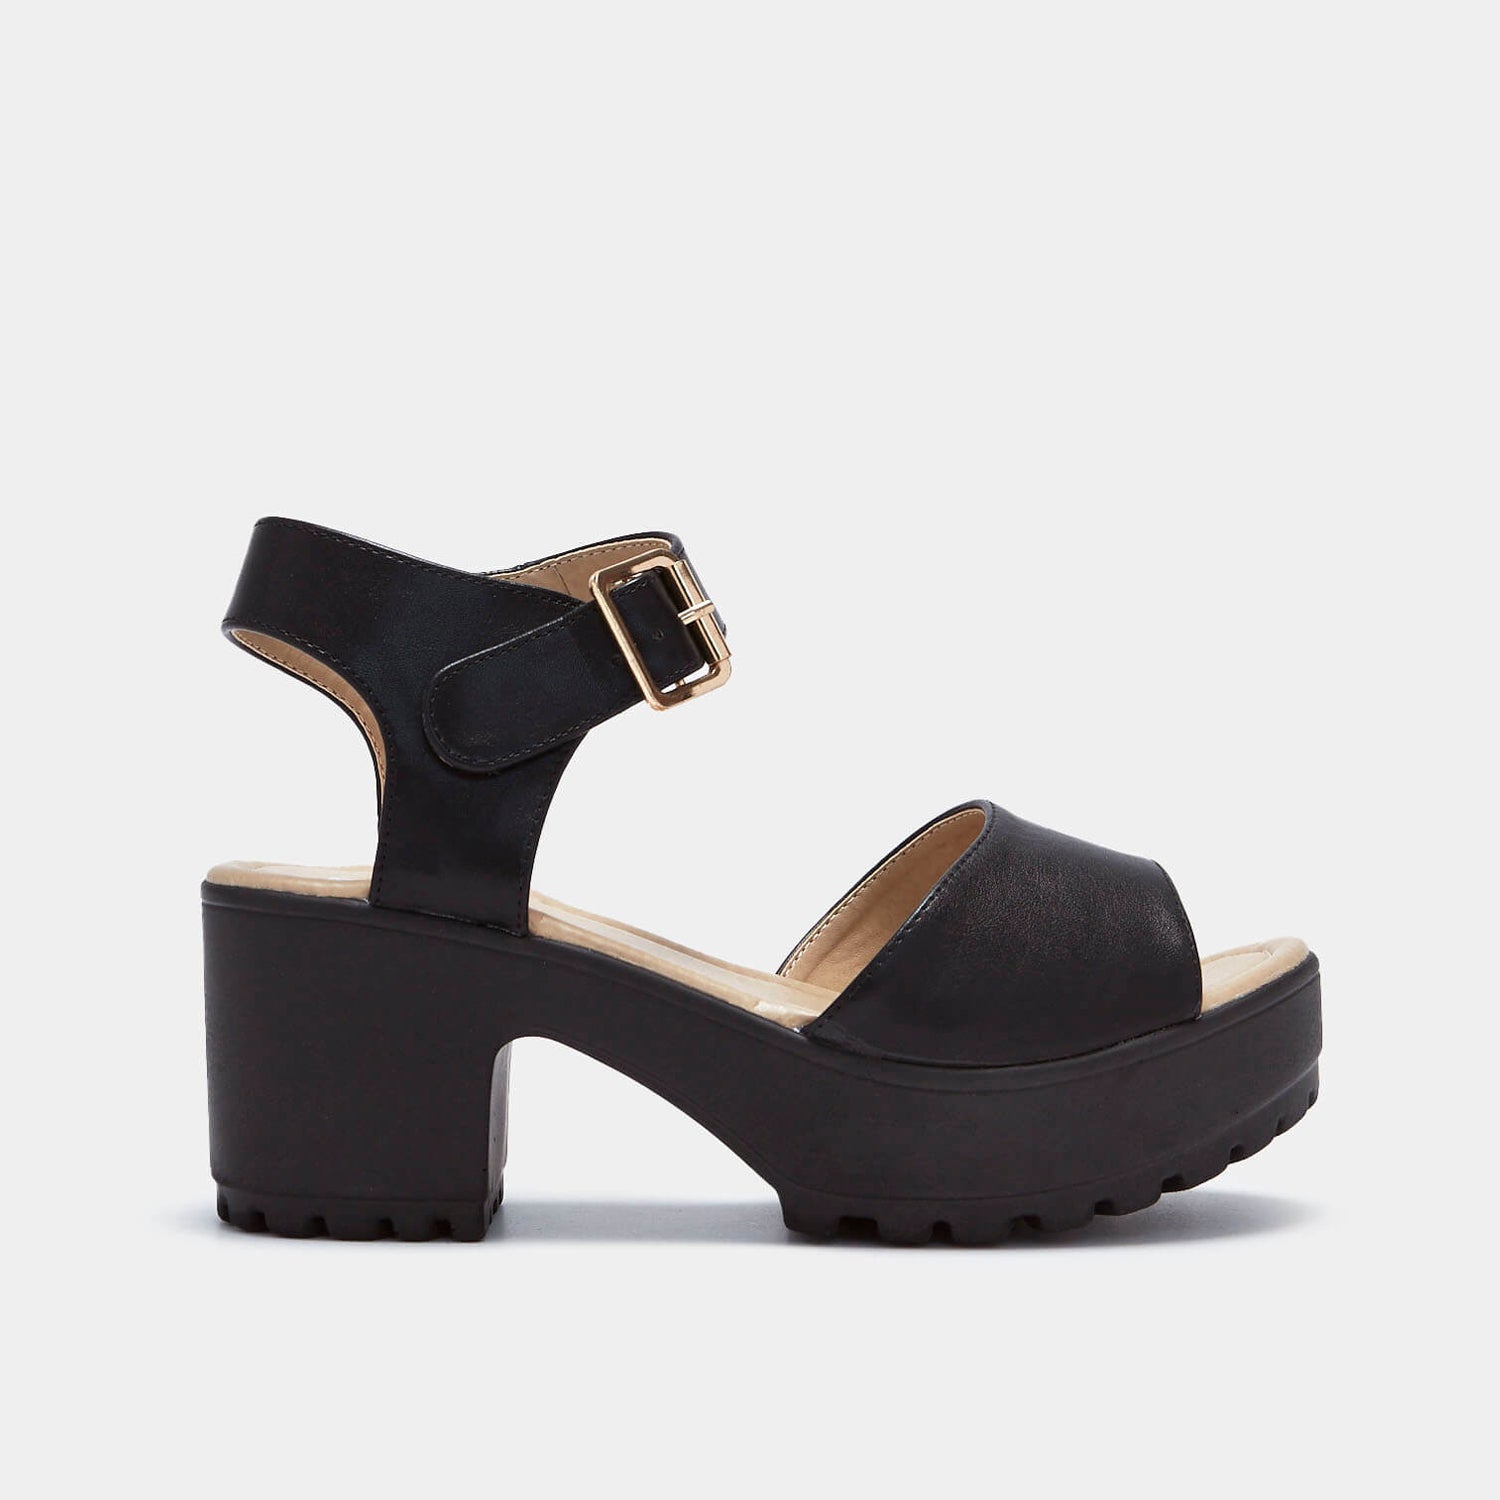 LOR Black Chunky Sandals - Sandals - KOI Footwear - Black - Side View